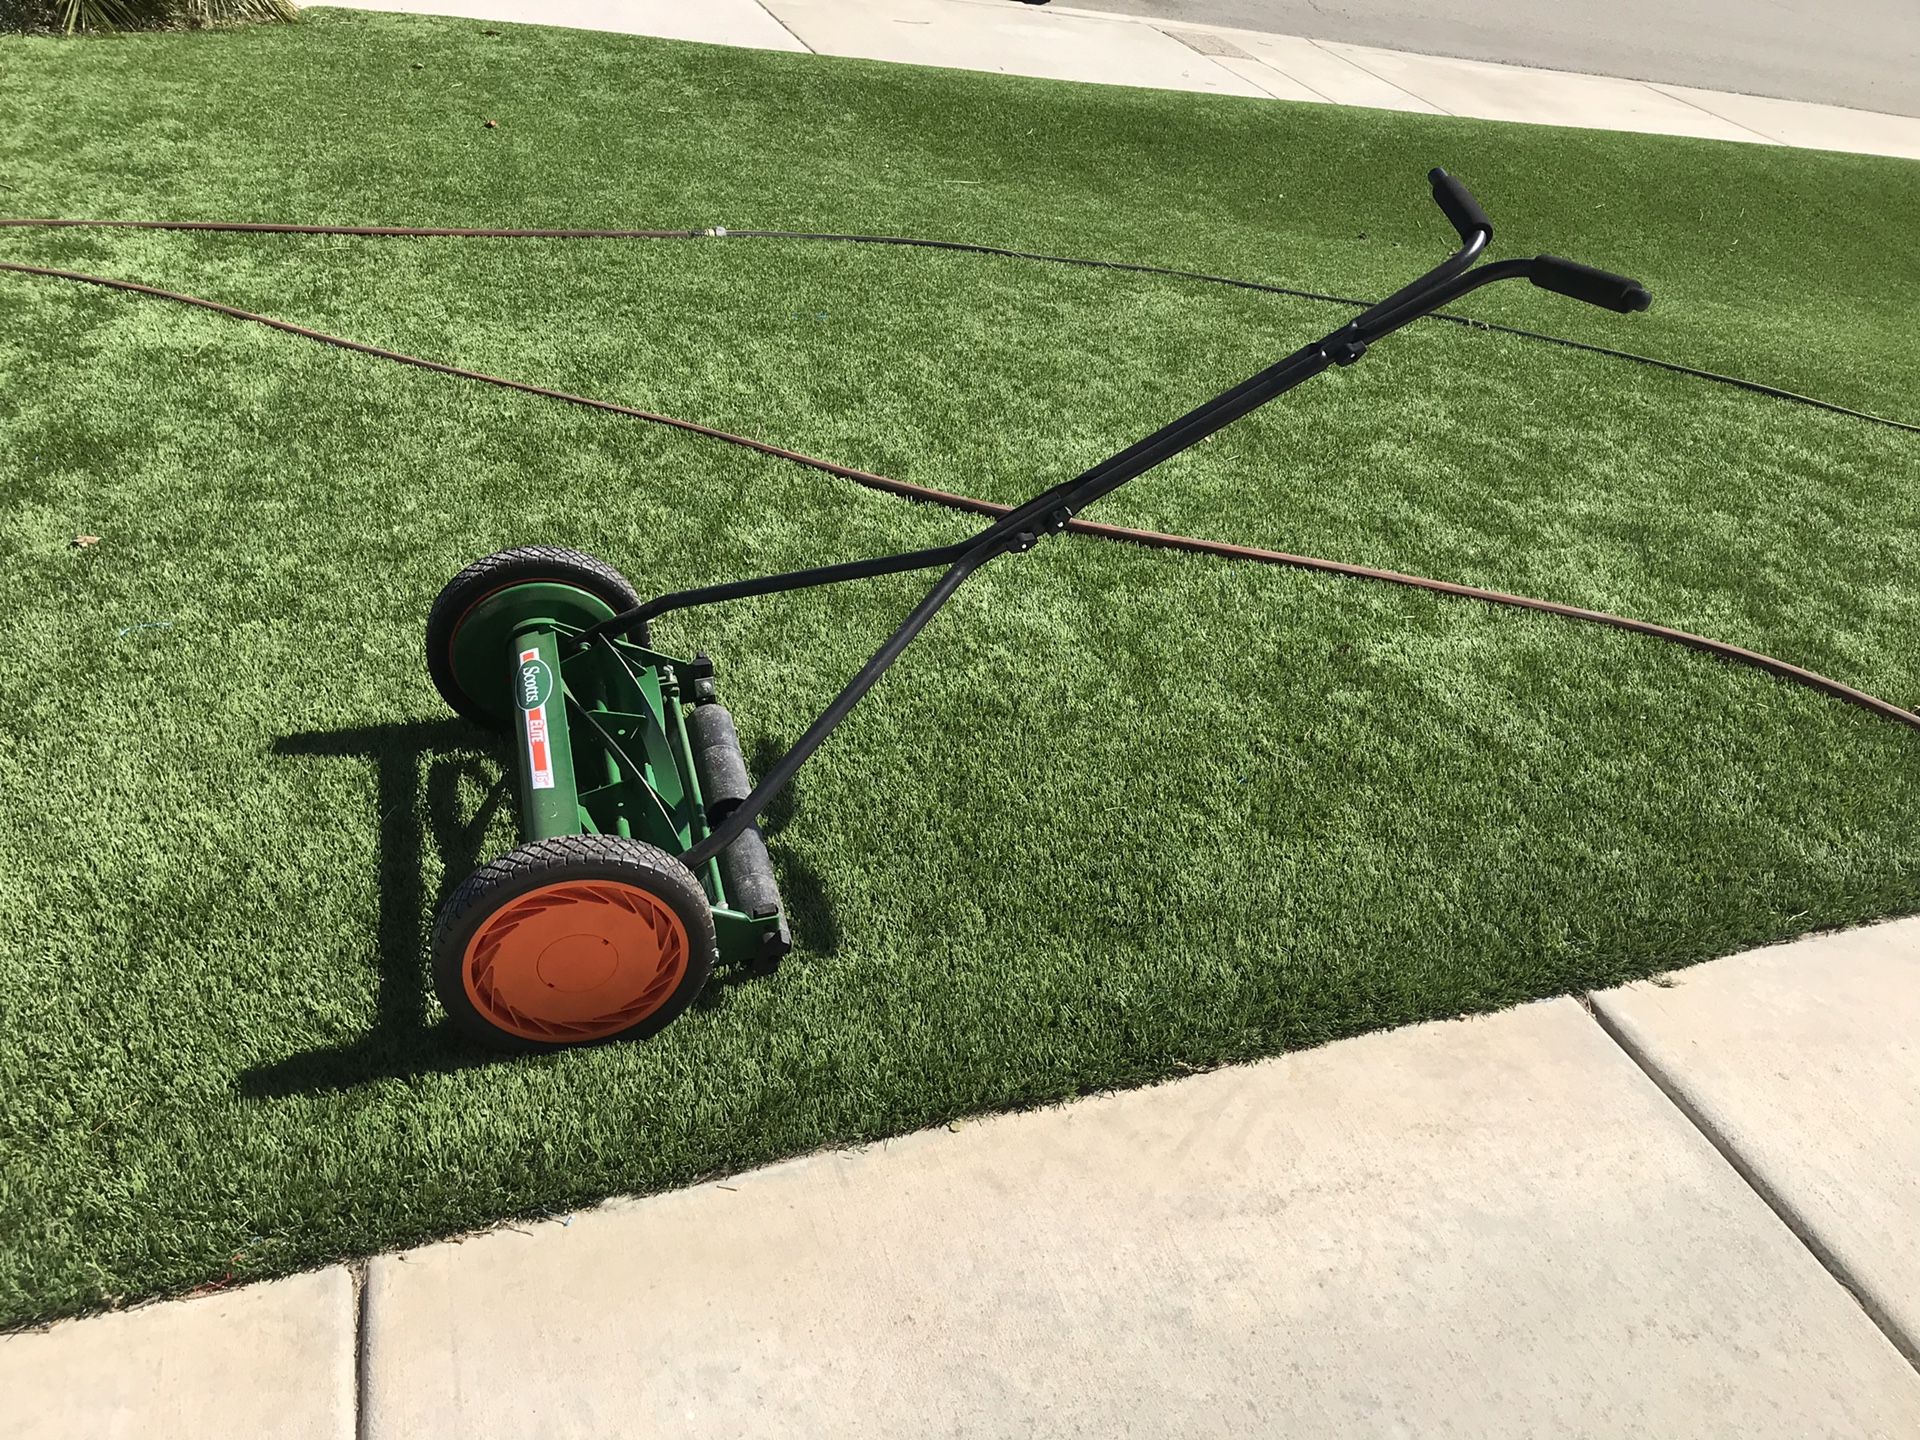 Scott’s Classic Push Lawn Mower 16 inch